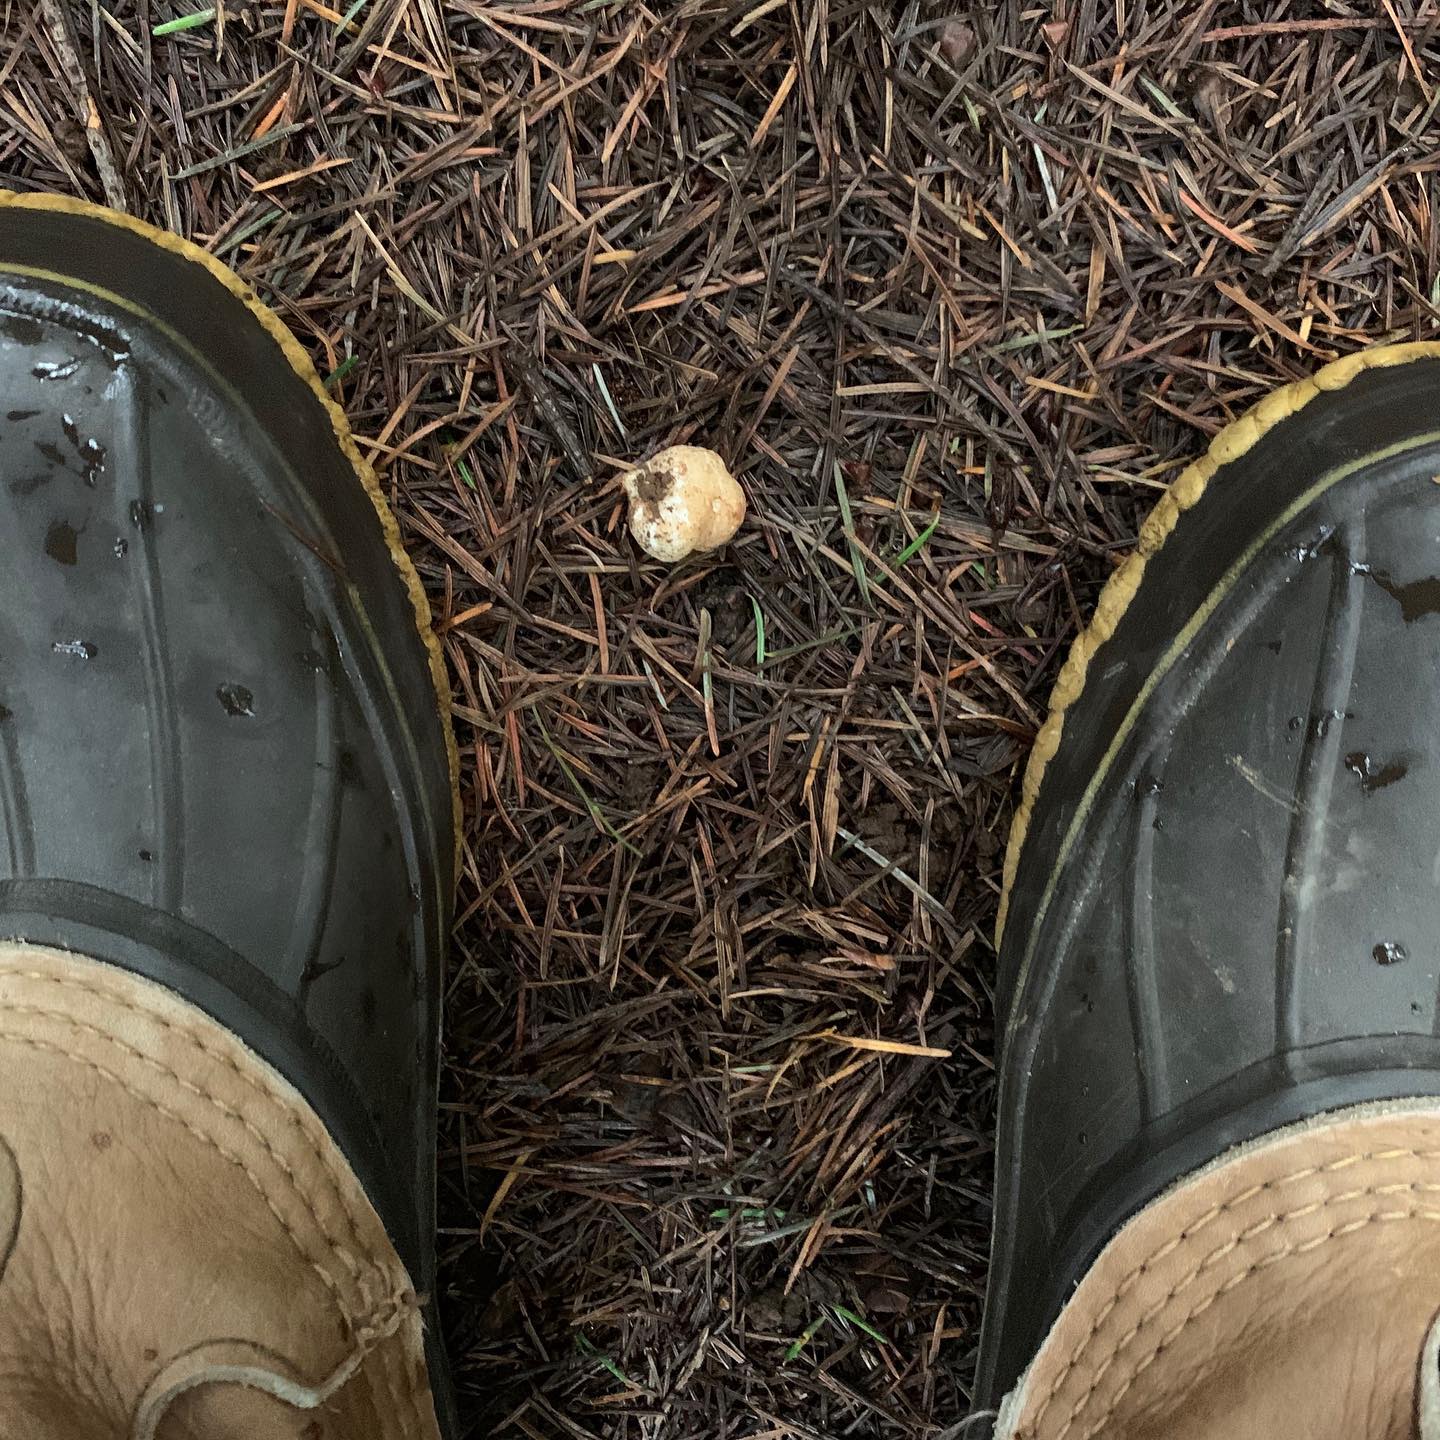 White Oregon Truffle between boots